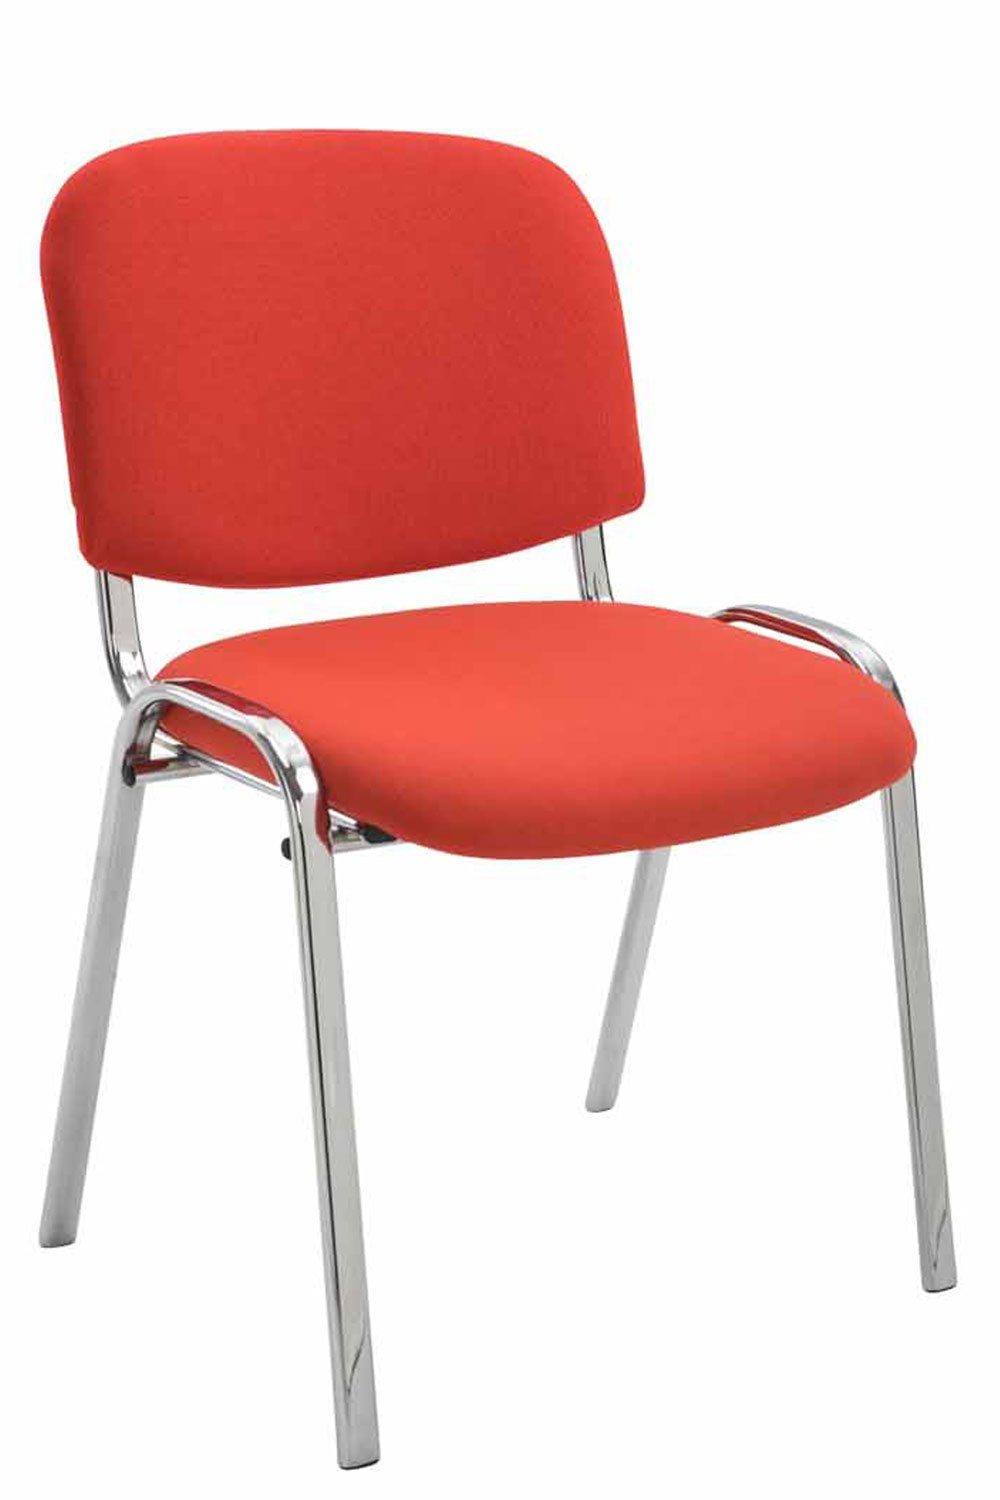 Besucherstuhl - - Stoff mit Gestell: rot (Besprechungsstuhl - Keen hochwertiger TPFLiving Konferenzstuhl Warteraumstuhl Messestuhl), - chrom Sitzfläche: Polsterung Metall